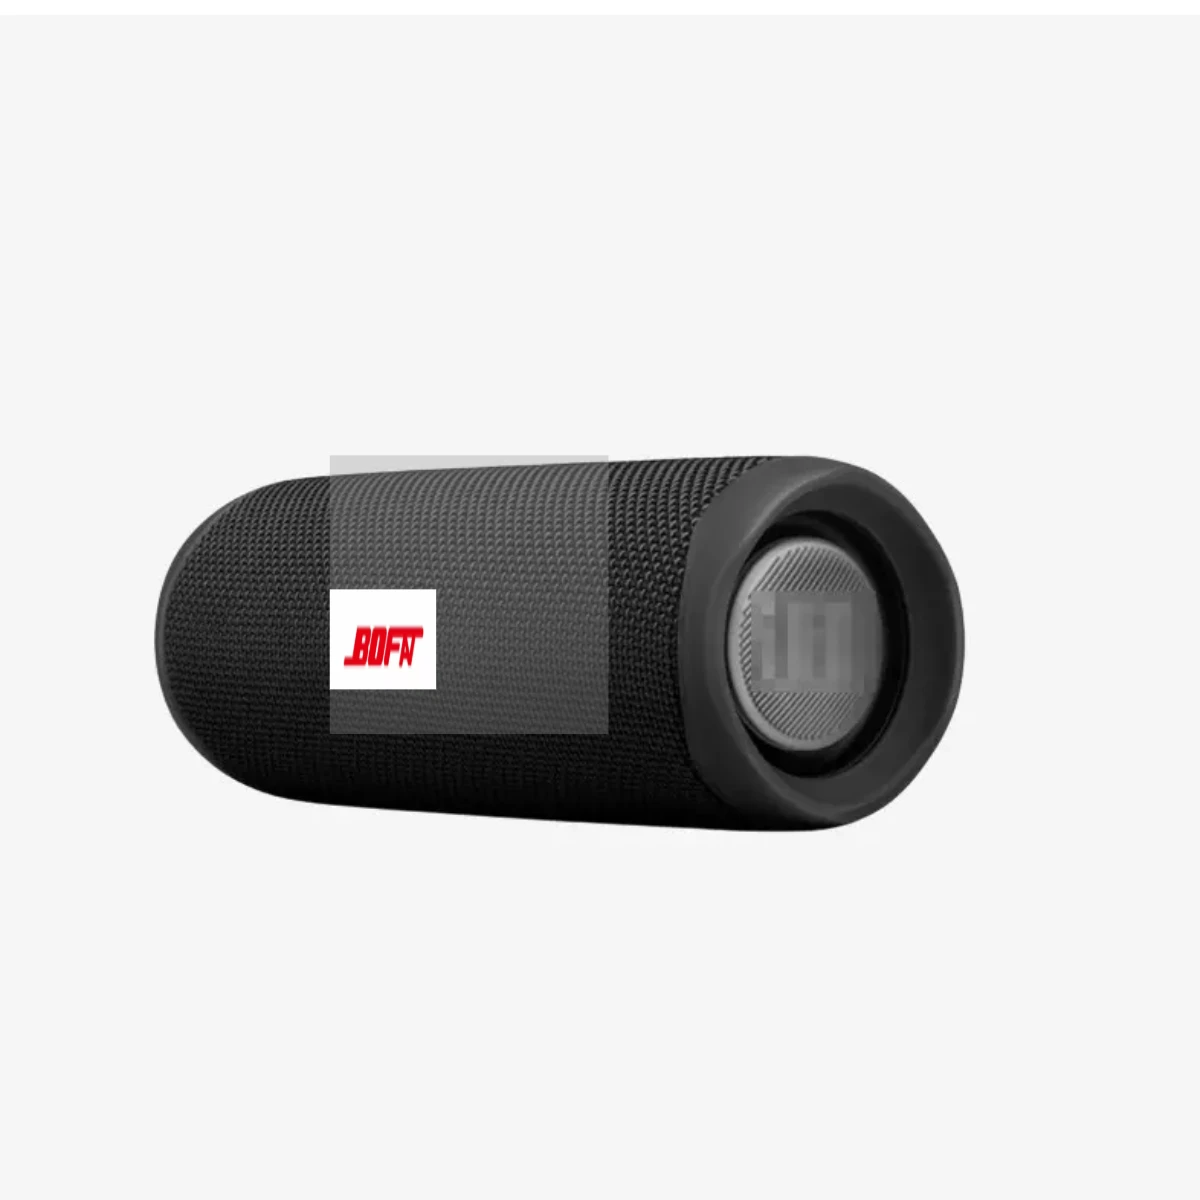 2020 Amazon Top Seller Outdoor Smart Wireless Blue tooth Speaker Flip 5 Outdoor Sports Waterproof Portable Speaker